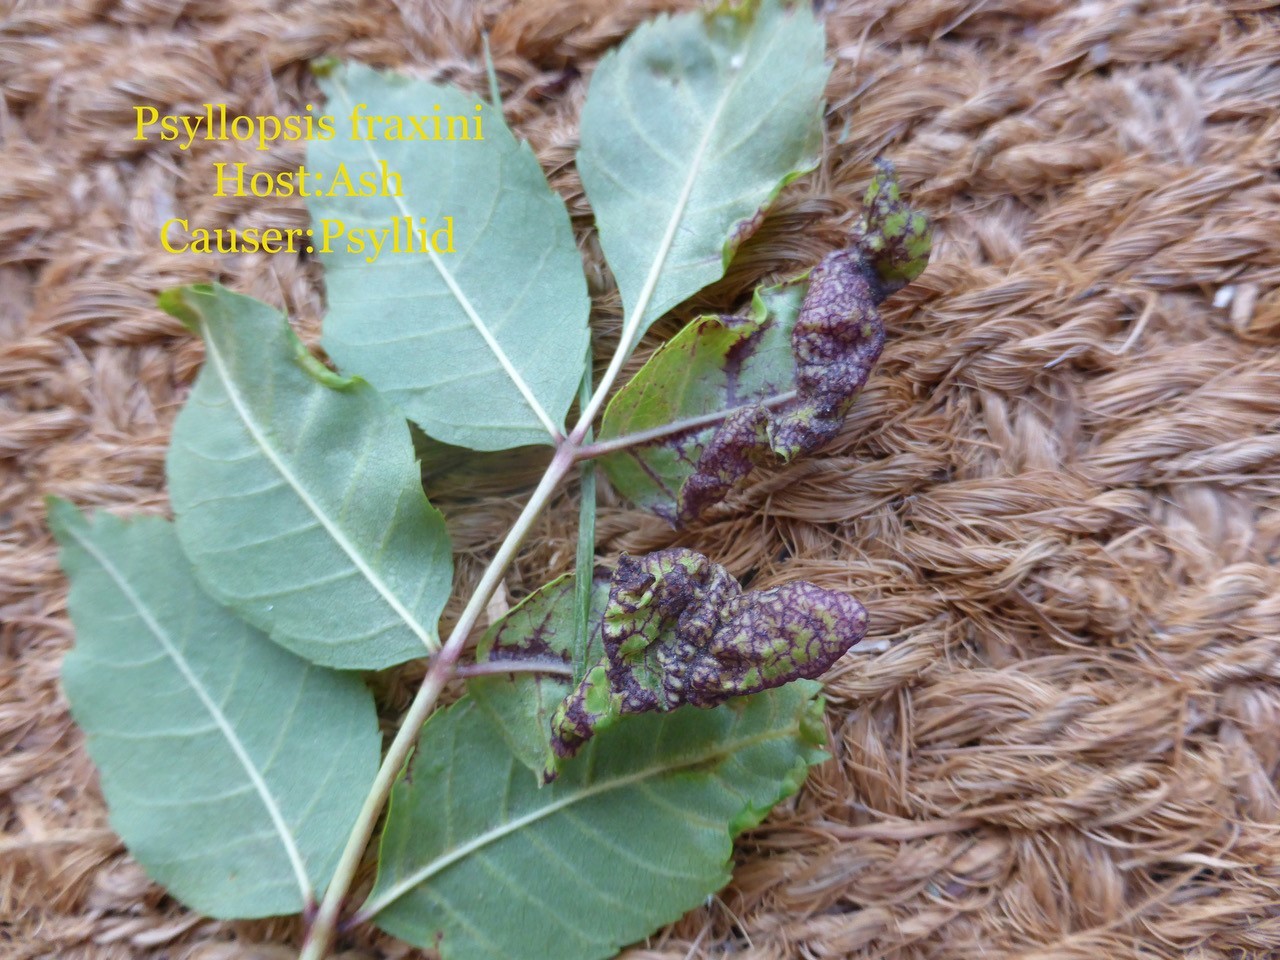 Psyllopsis fraxini causing Purple veined rolls, Shirebrook Nature Reserve.